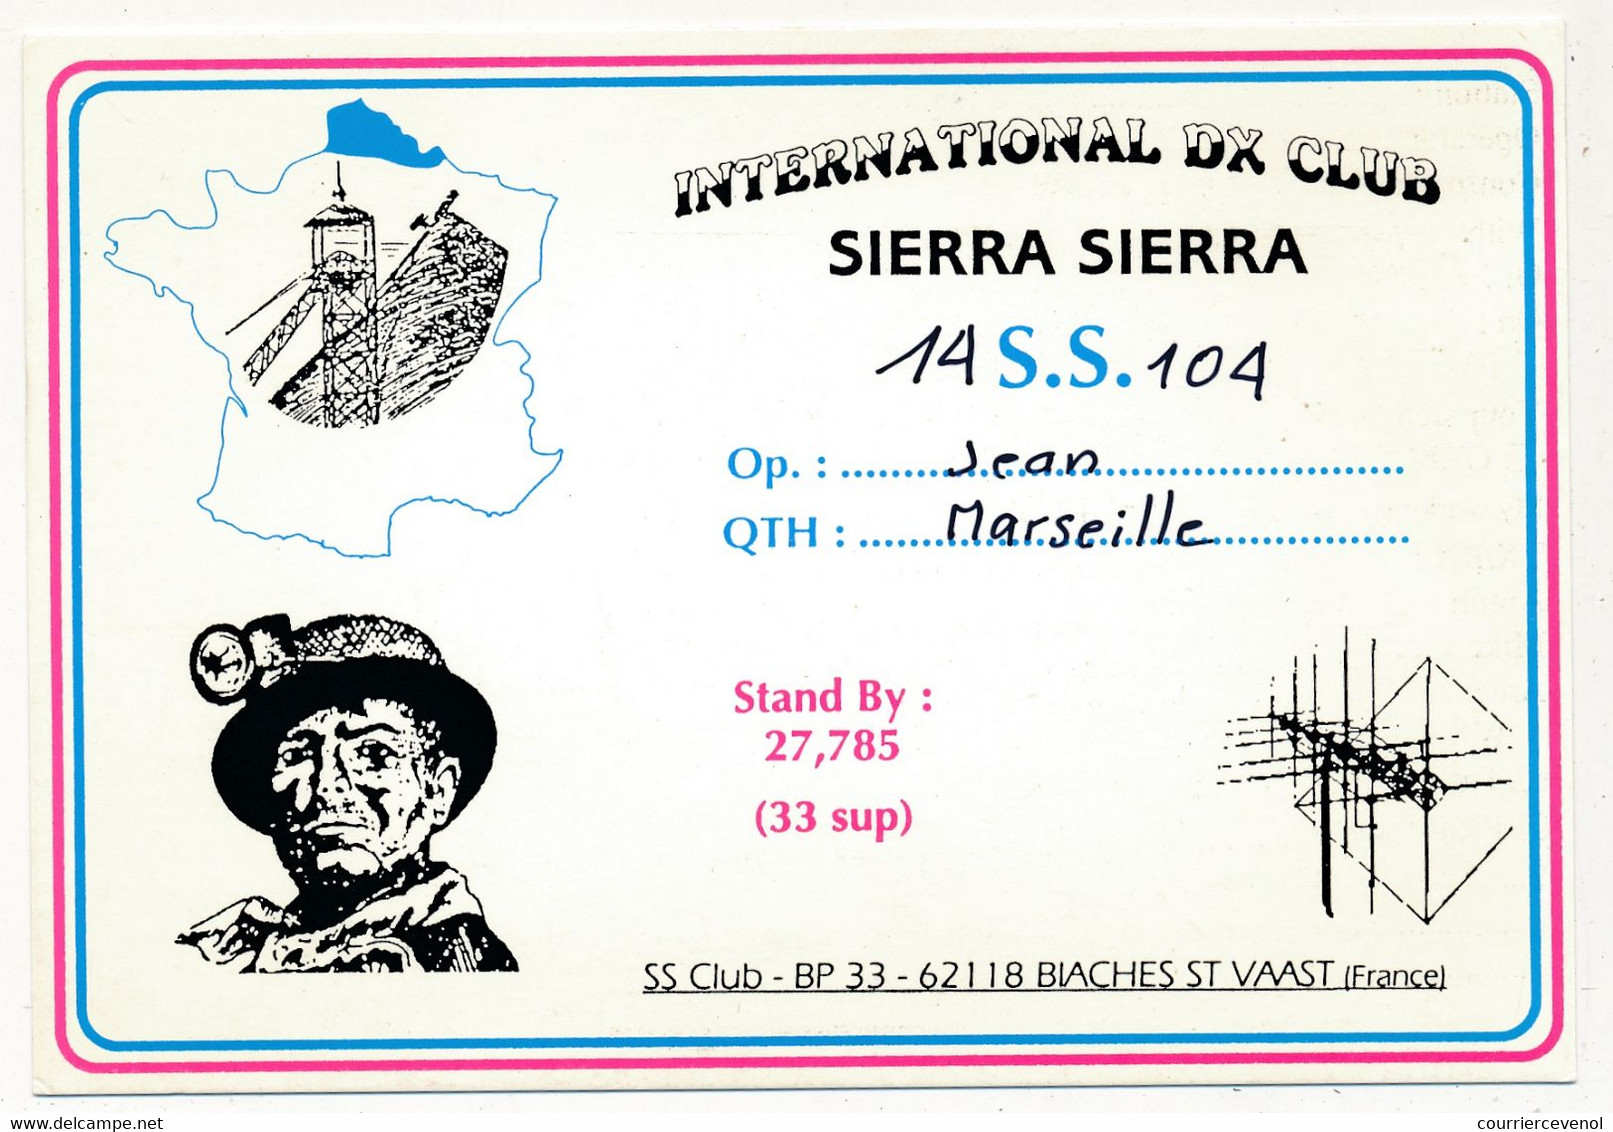 FRANCE - Carte Radio-amateur - FRANCE / BIACHES ST VAAST - International DX Club Sierra Sierra - 14 SS 104 - Radio-amateur